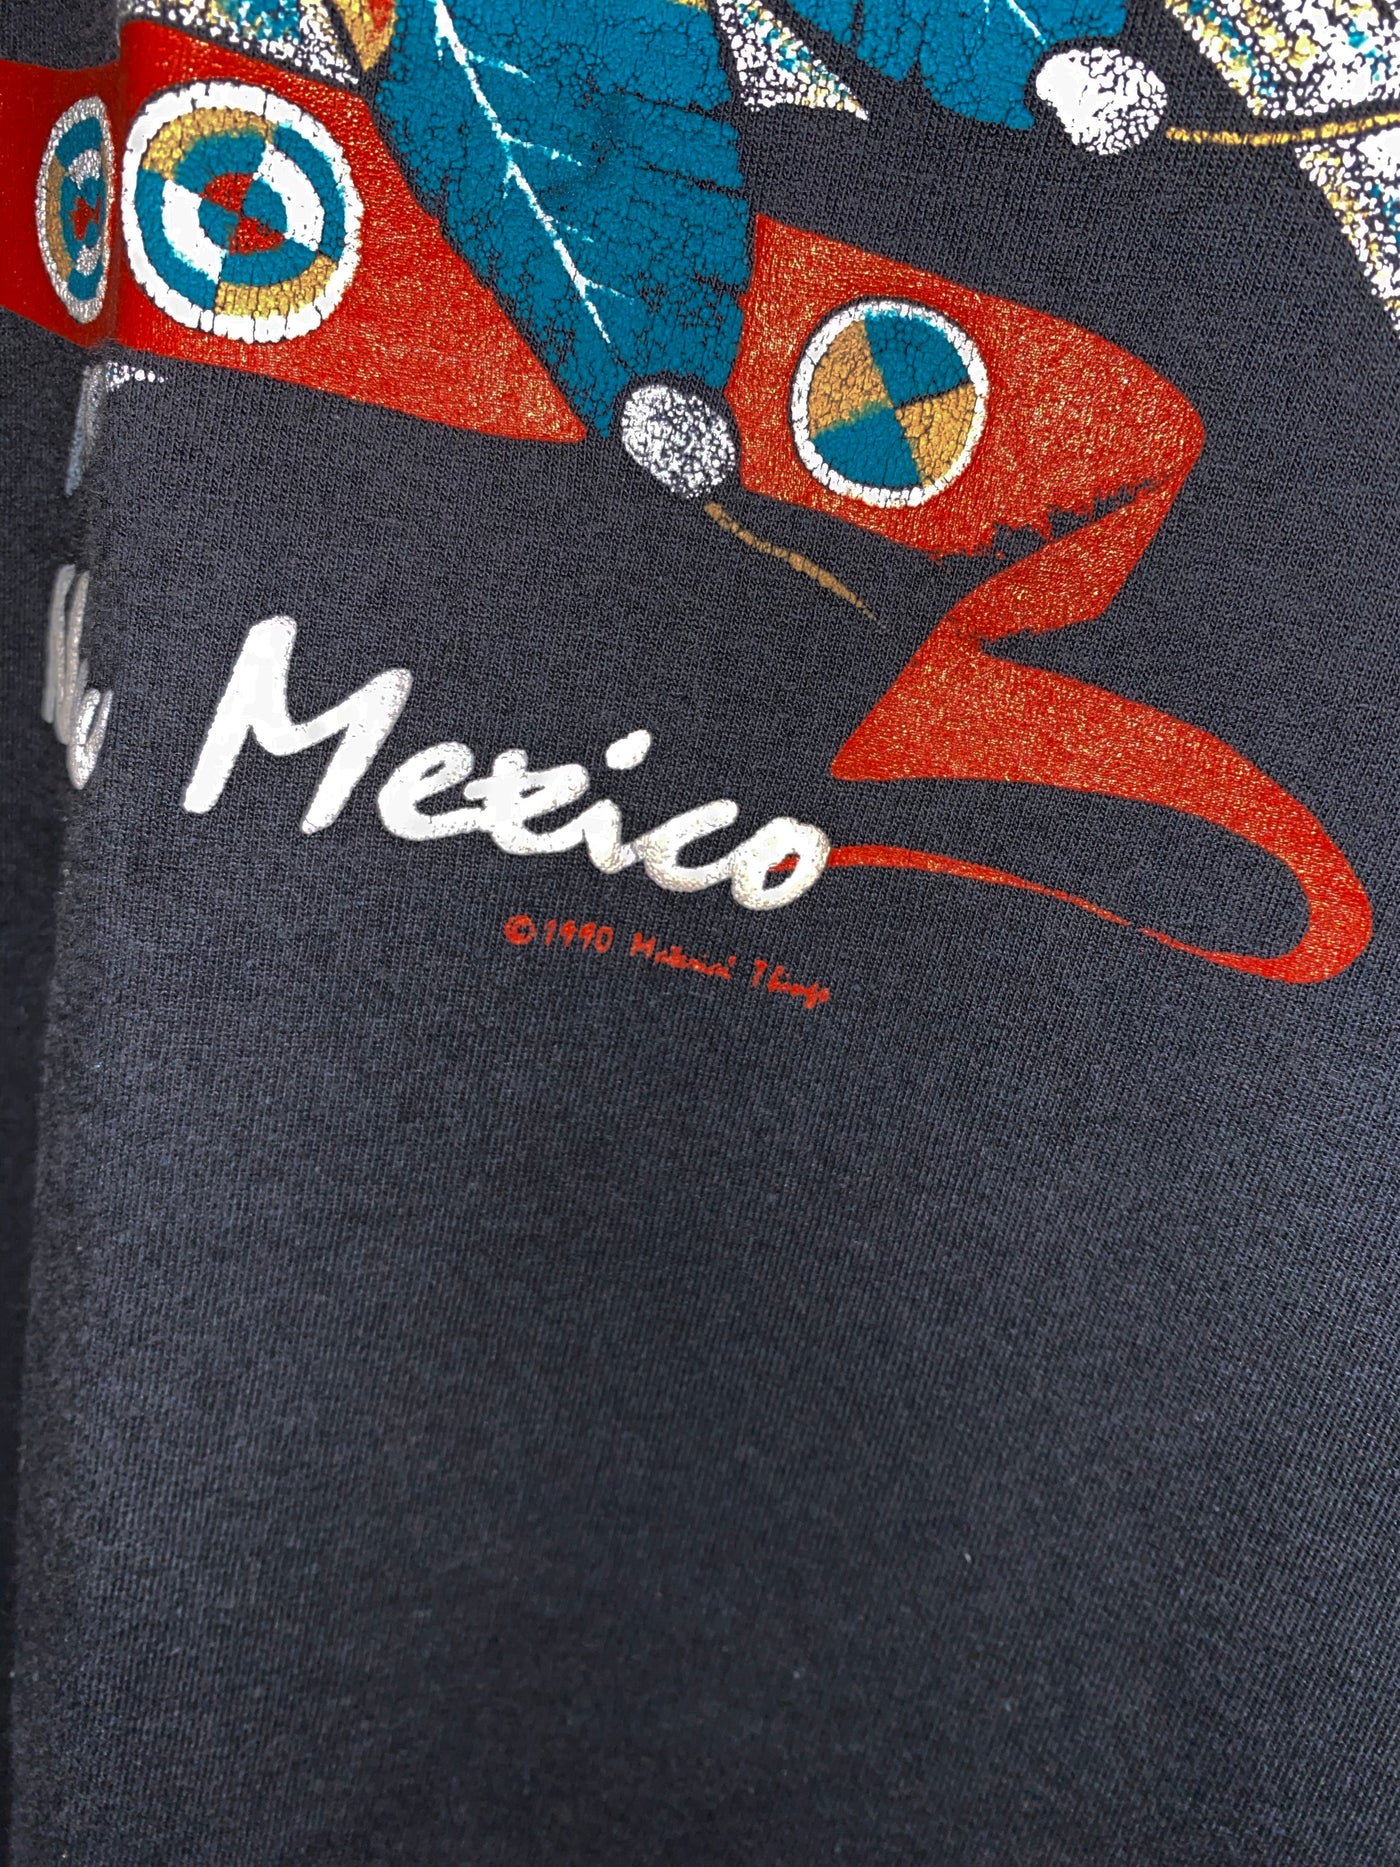 Vintage Oneita 1990 New Mexico Horse T-Shirt